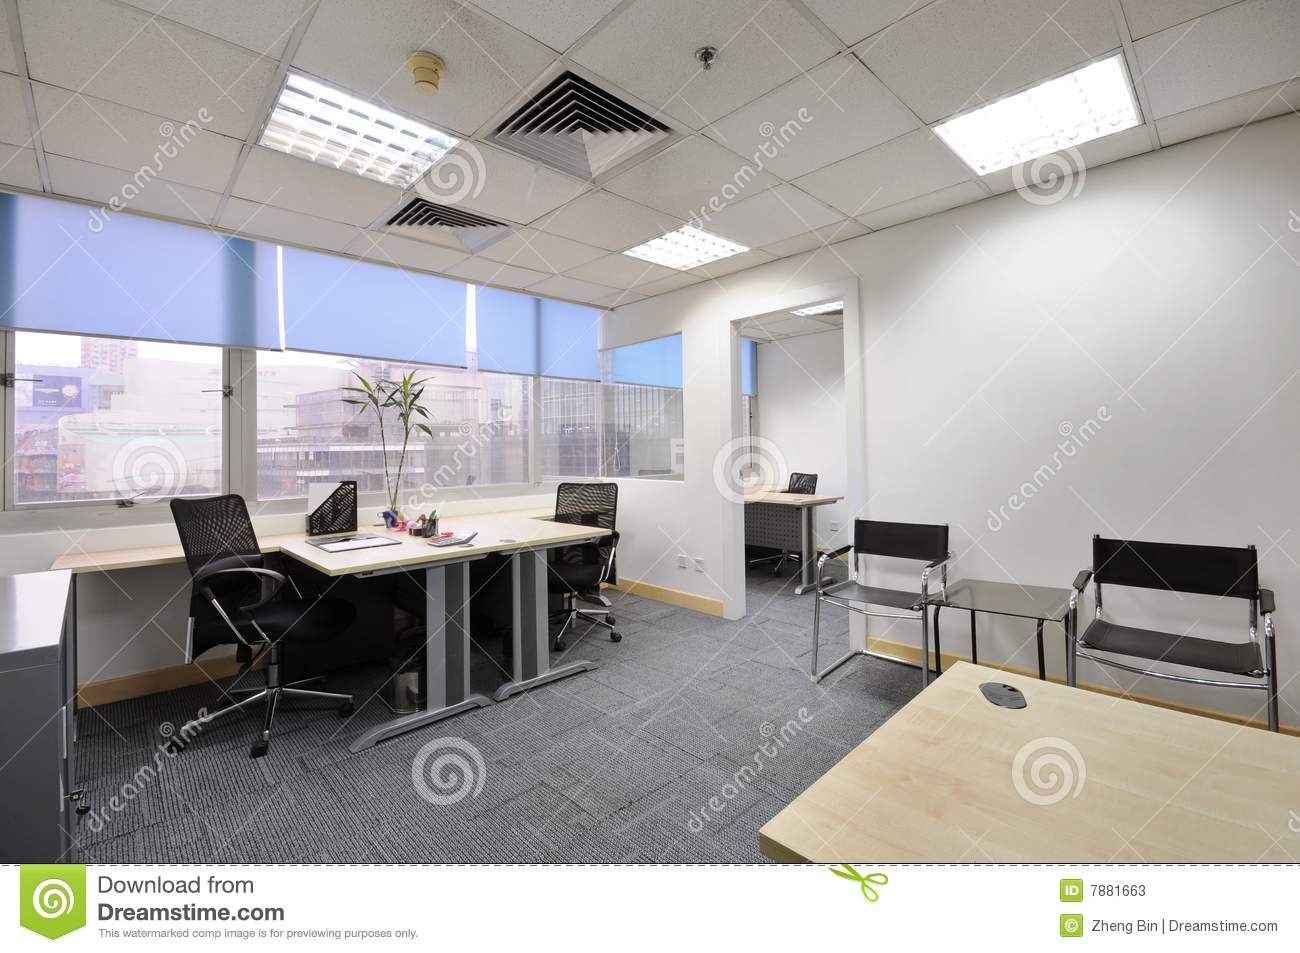 Office Office Room Modern On Within Stock Image Of Floor Flooring Hard 7881663 17 Office Room